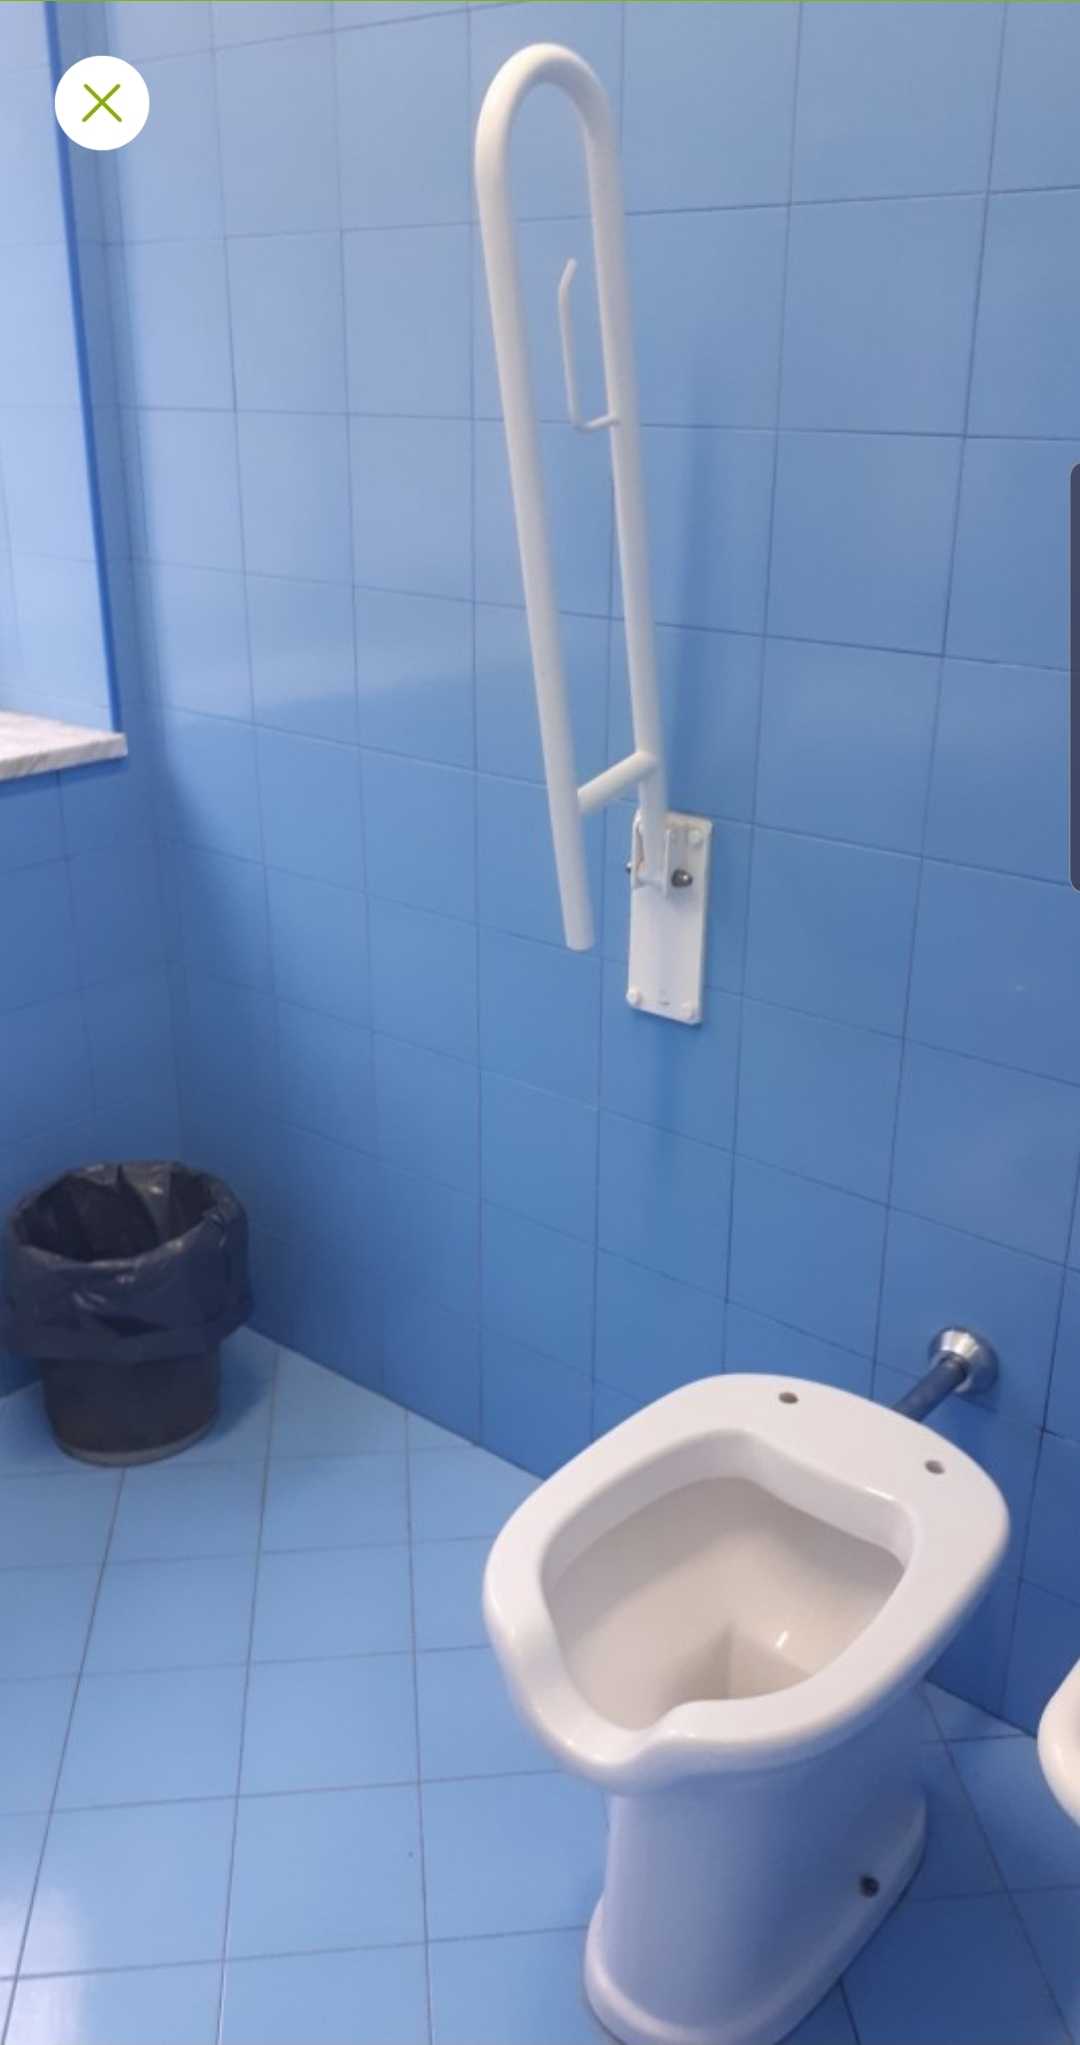 Wheelchair accessible bathroom Herculaneum right handle bar